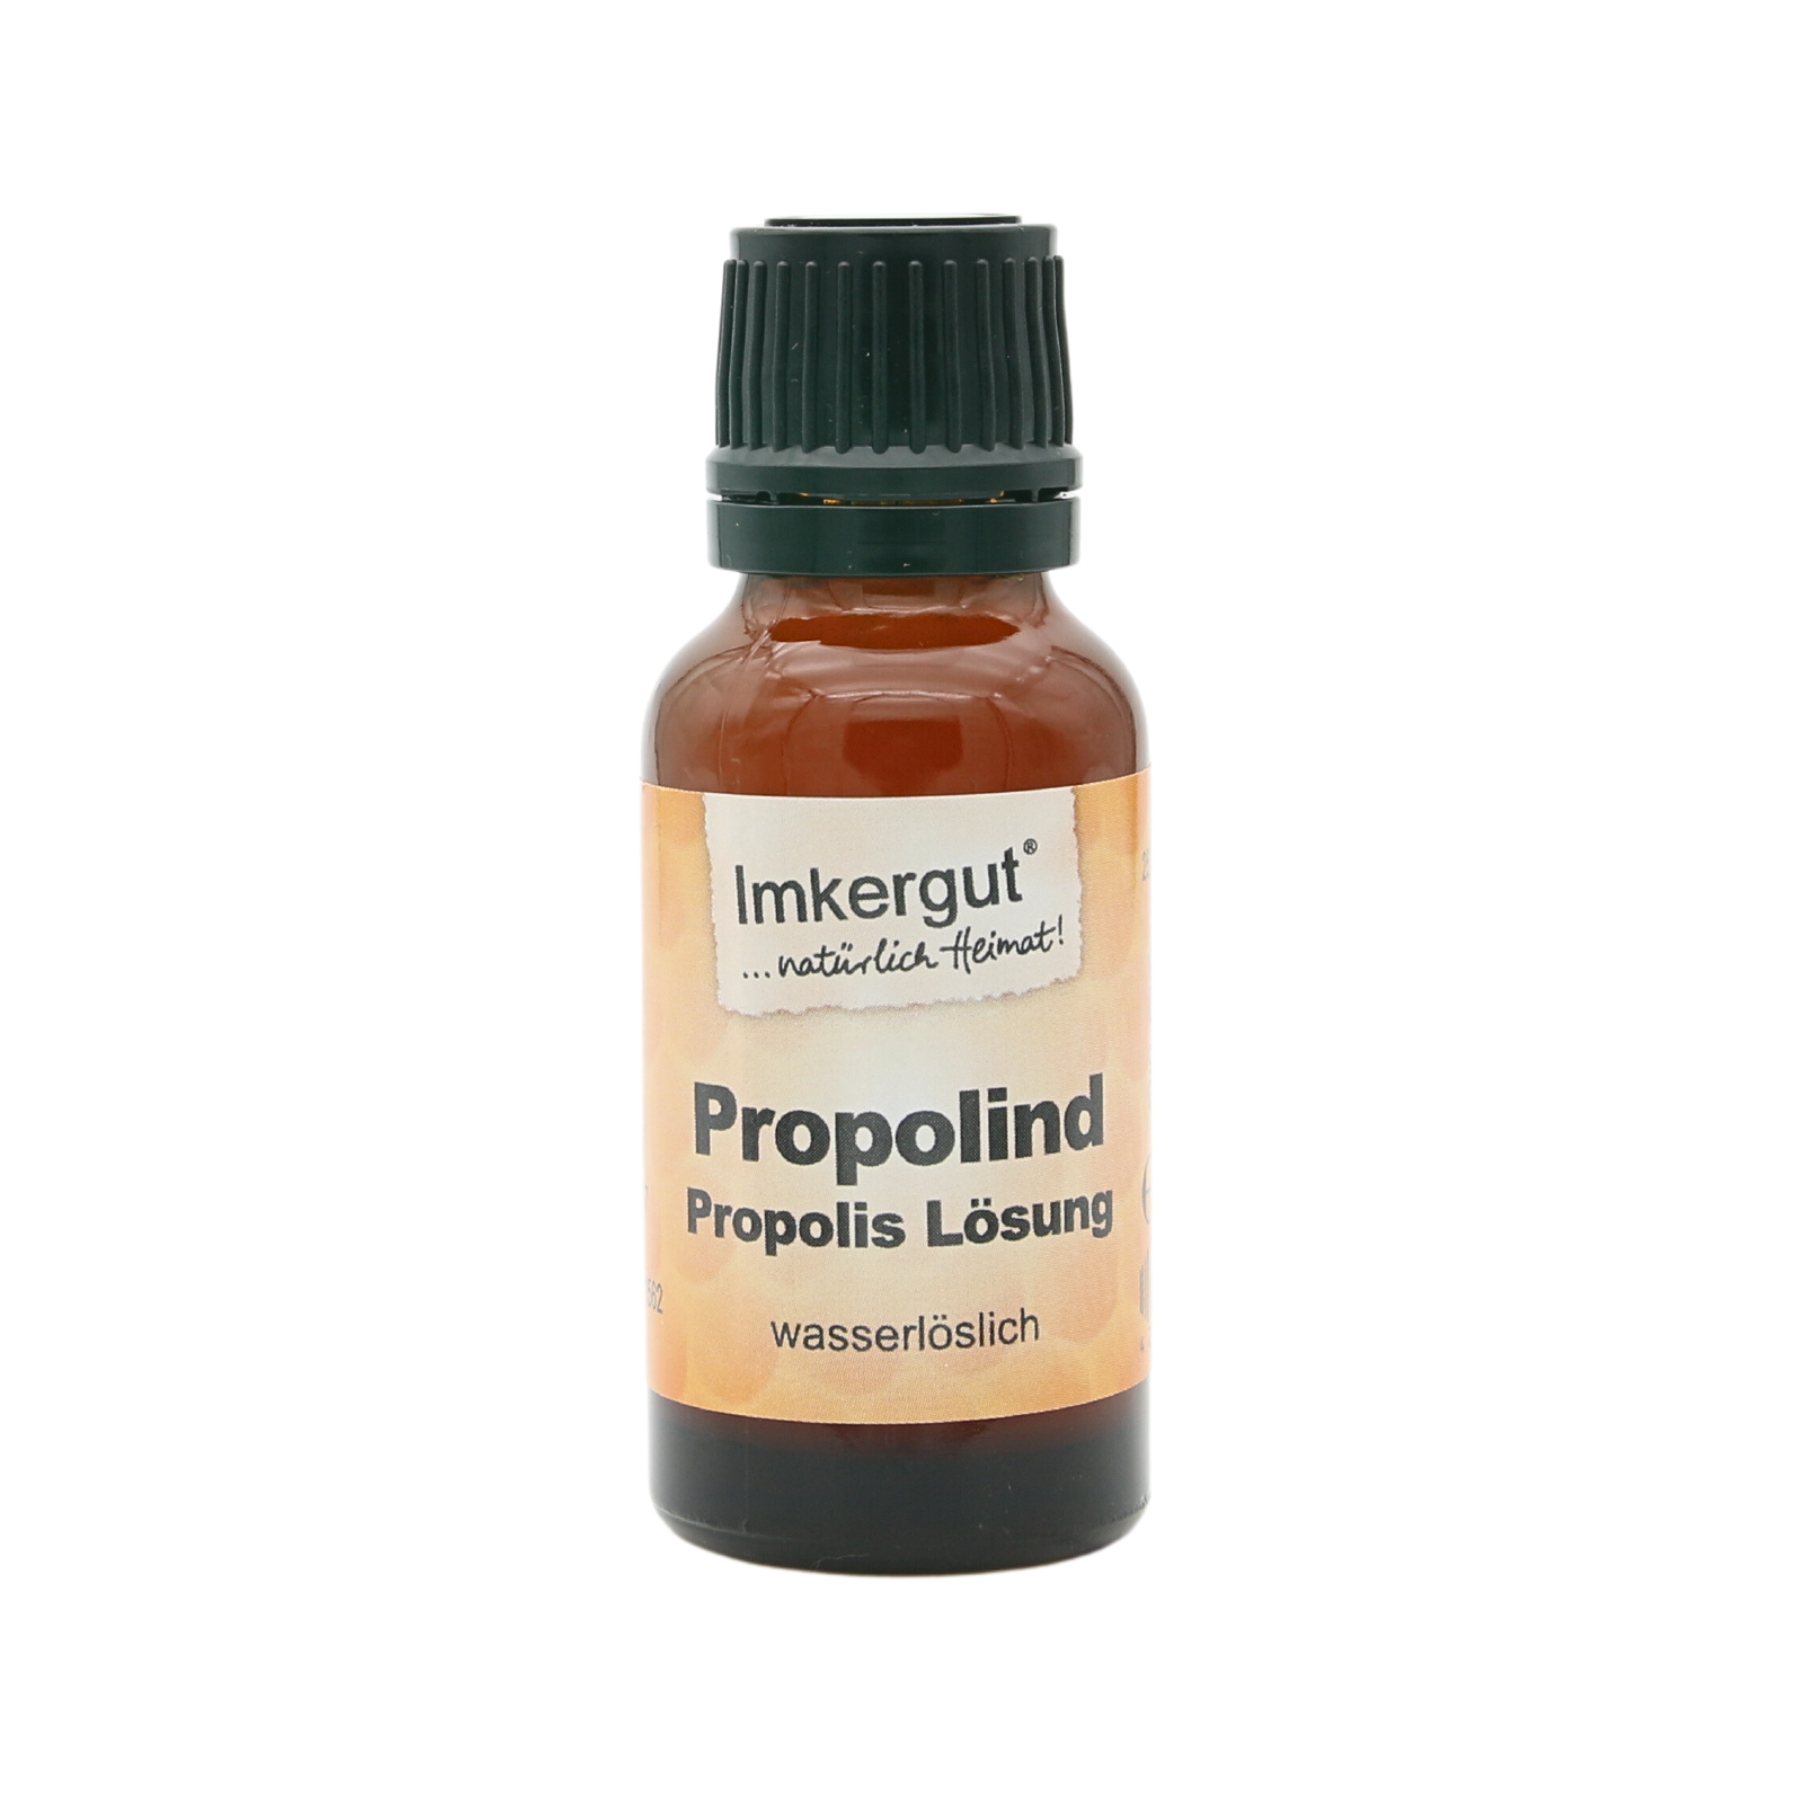 Propolind Propolis Lösung 20 ml Flasche